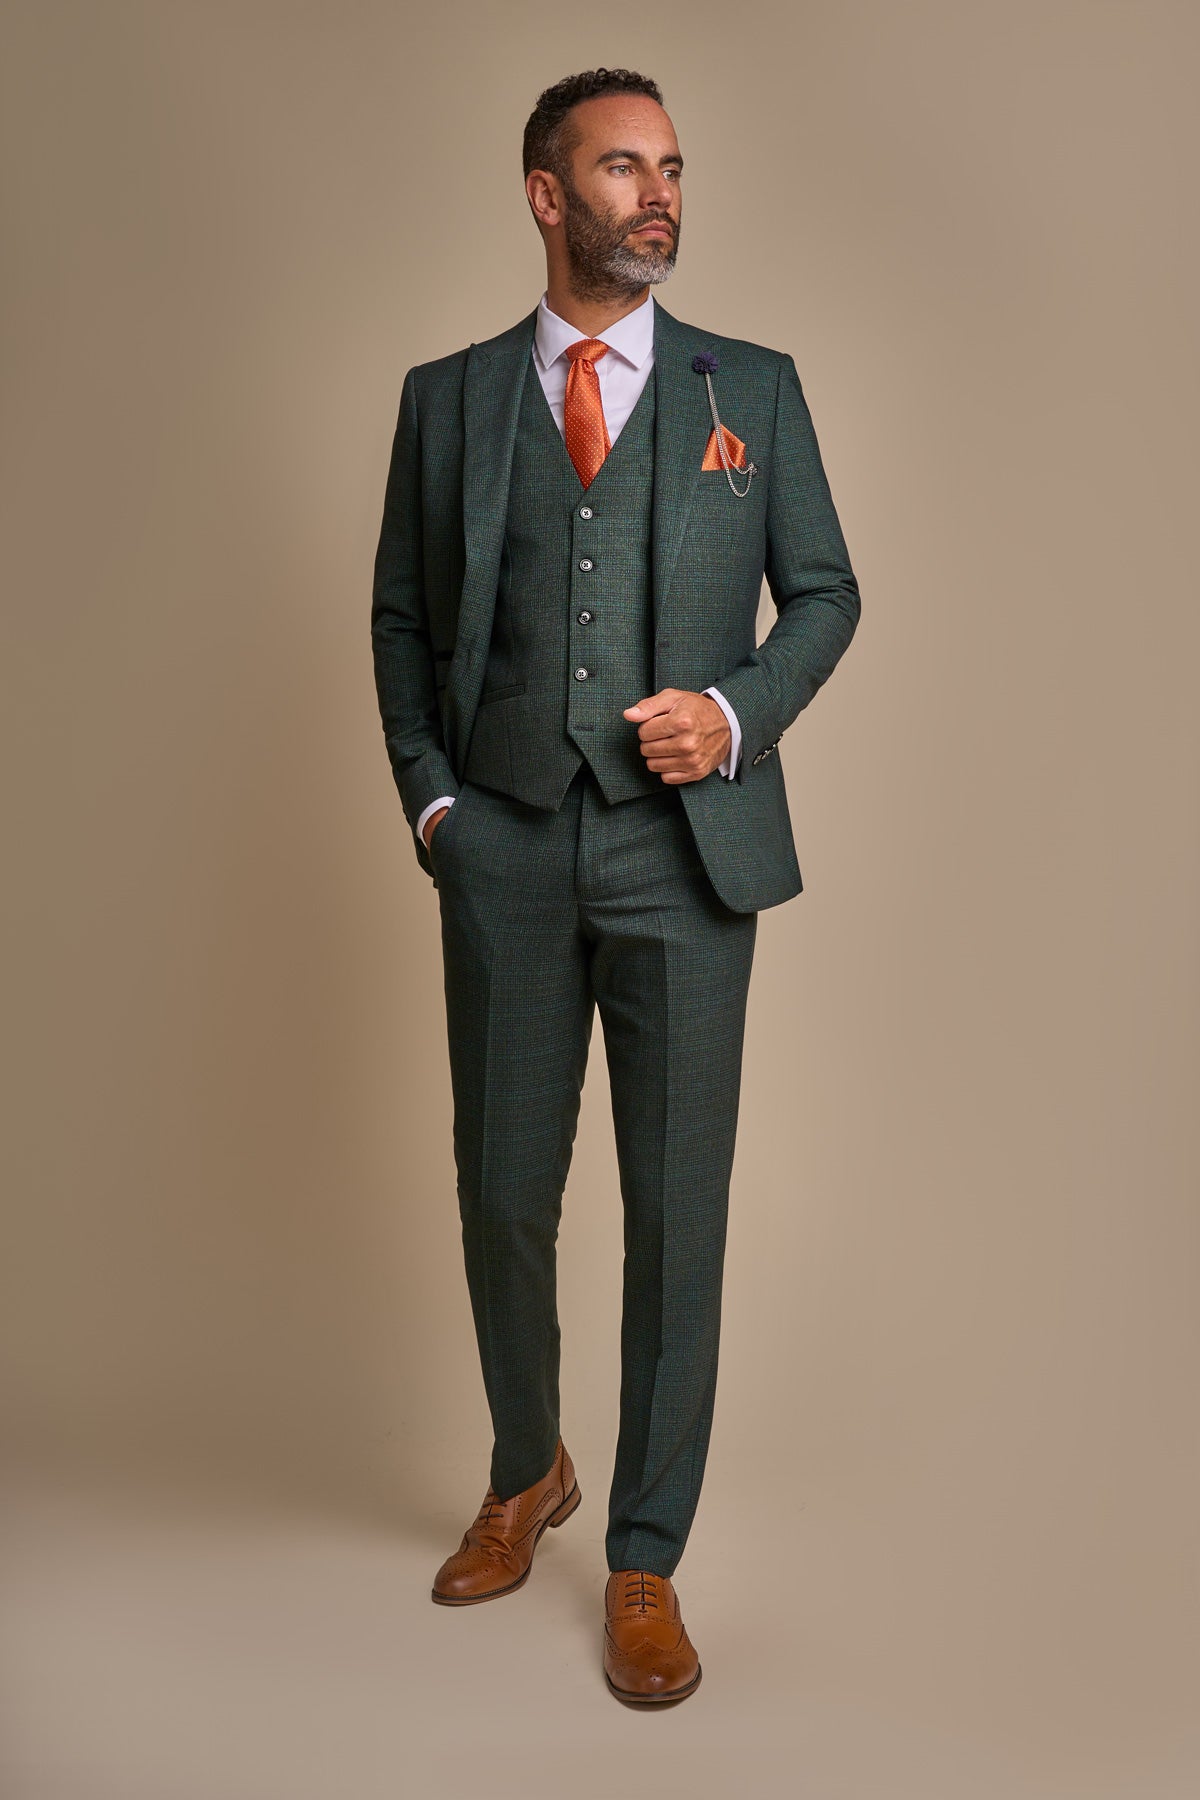 Caridi Olive Suit Swatch